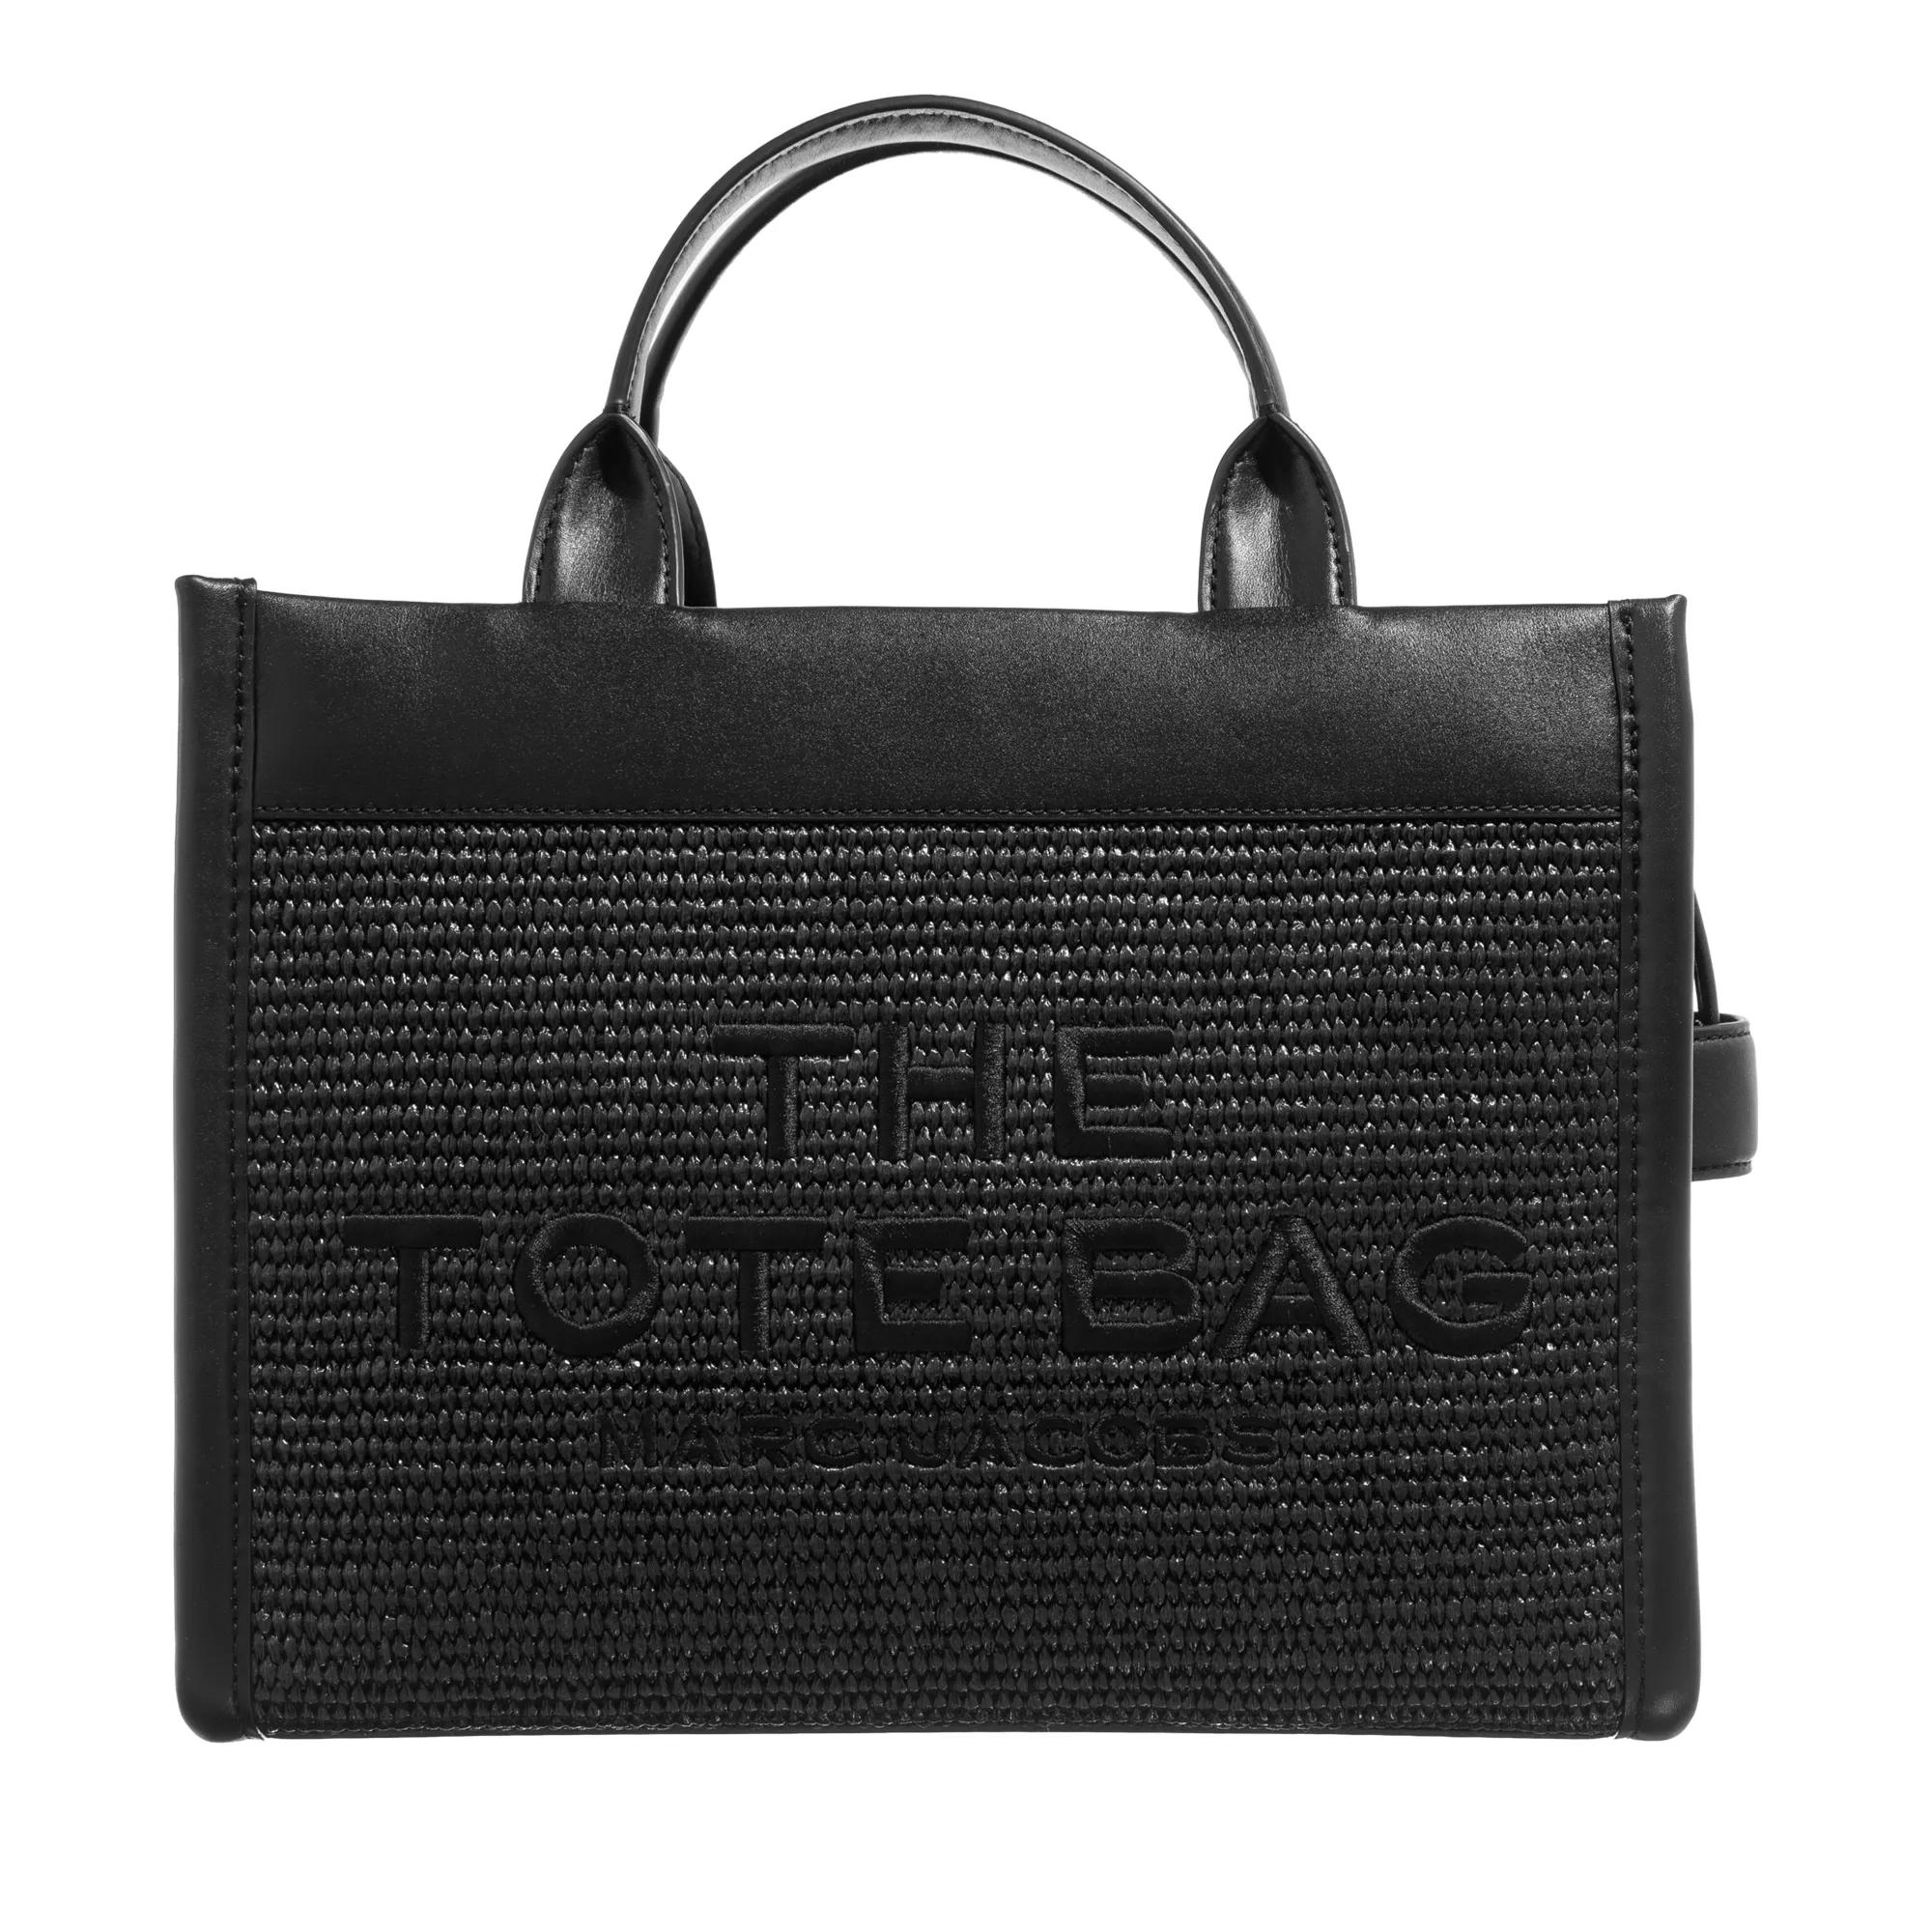 Marc Jacobs Medium Woven Raffia Tote Bag Black | Tote | fashionette